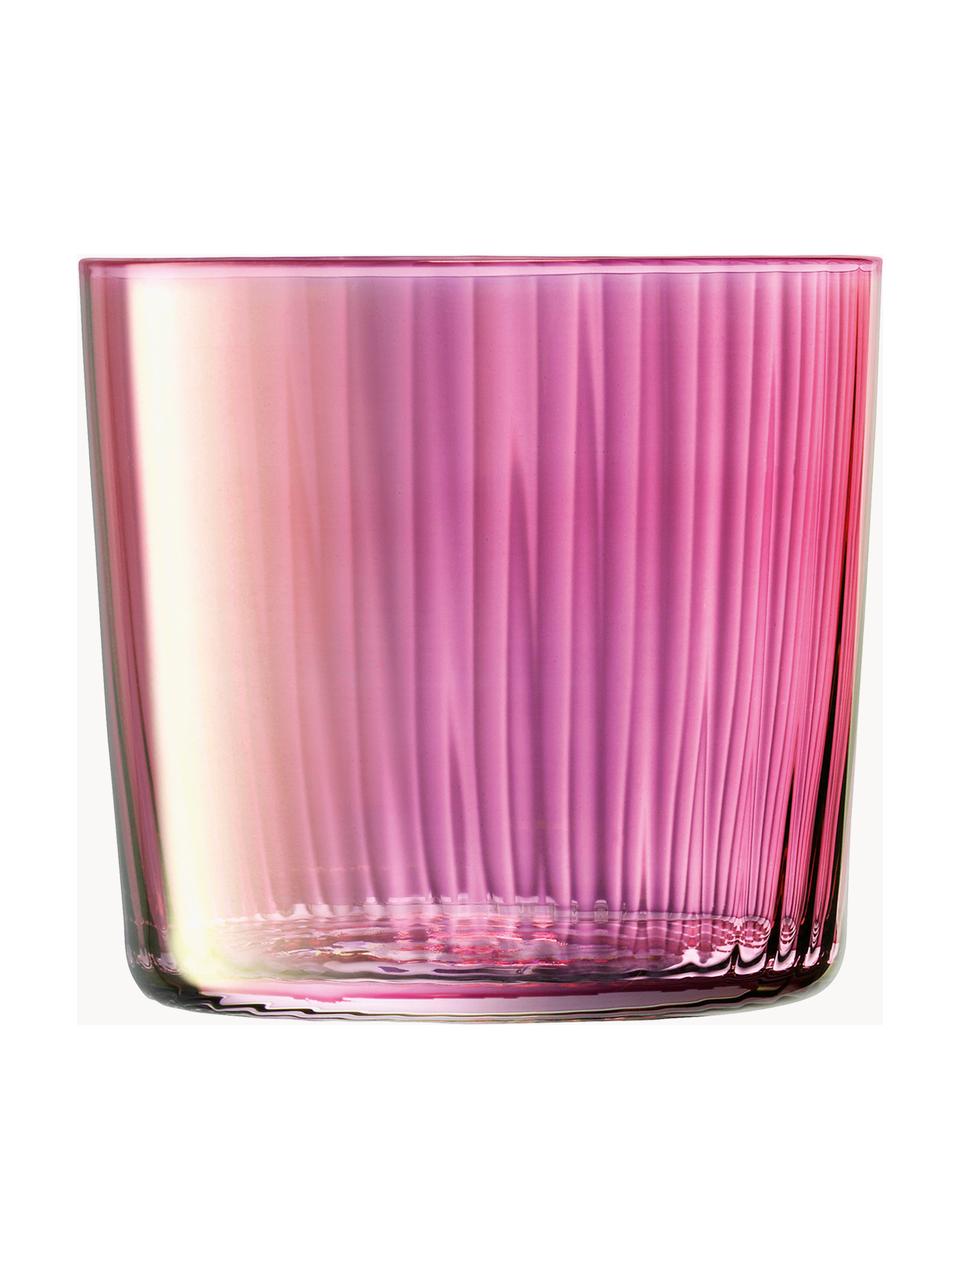 Set 4 bicchieri in vetro soffiato Gems, Vetro soffiato, Tonalità di rosa e viola, Ø 8 x Alt. 7 cm, 300 ml